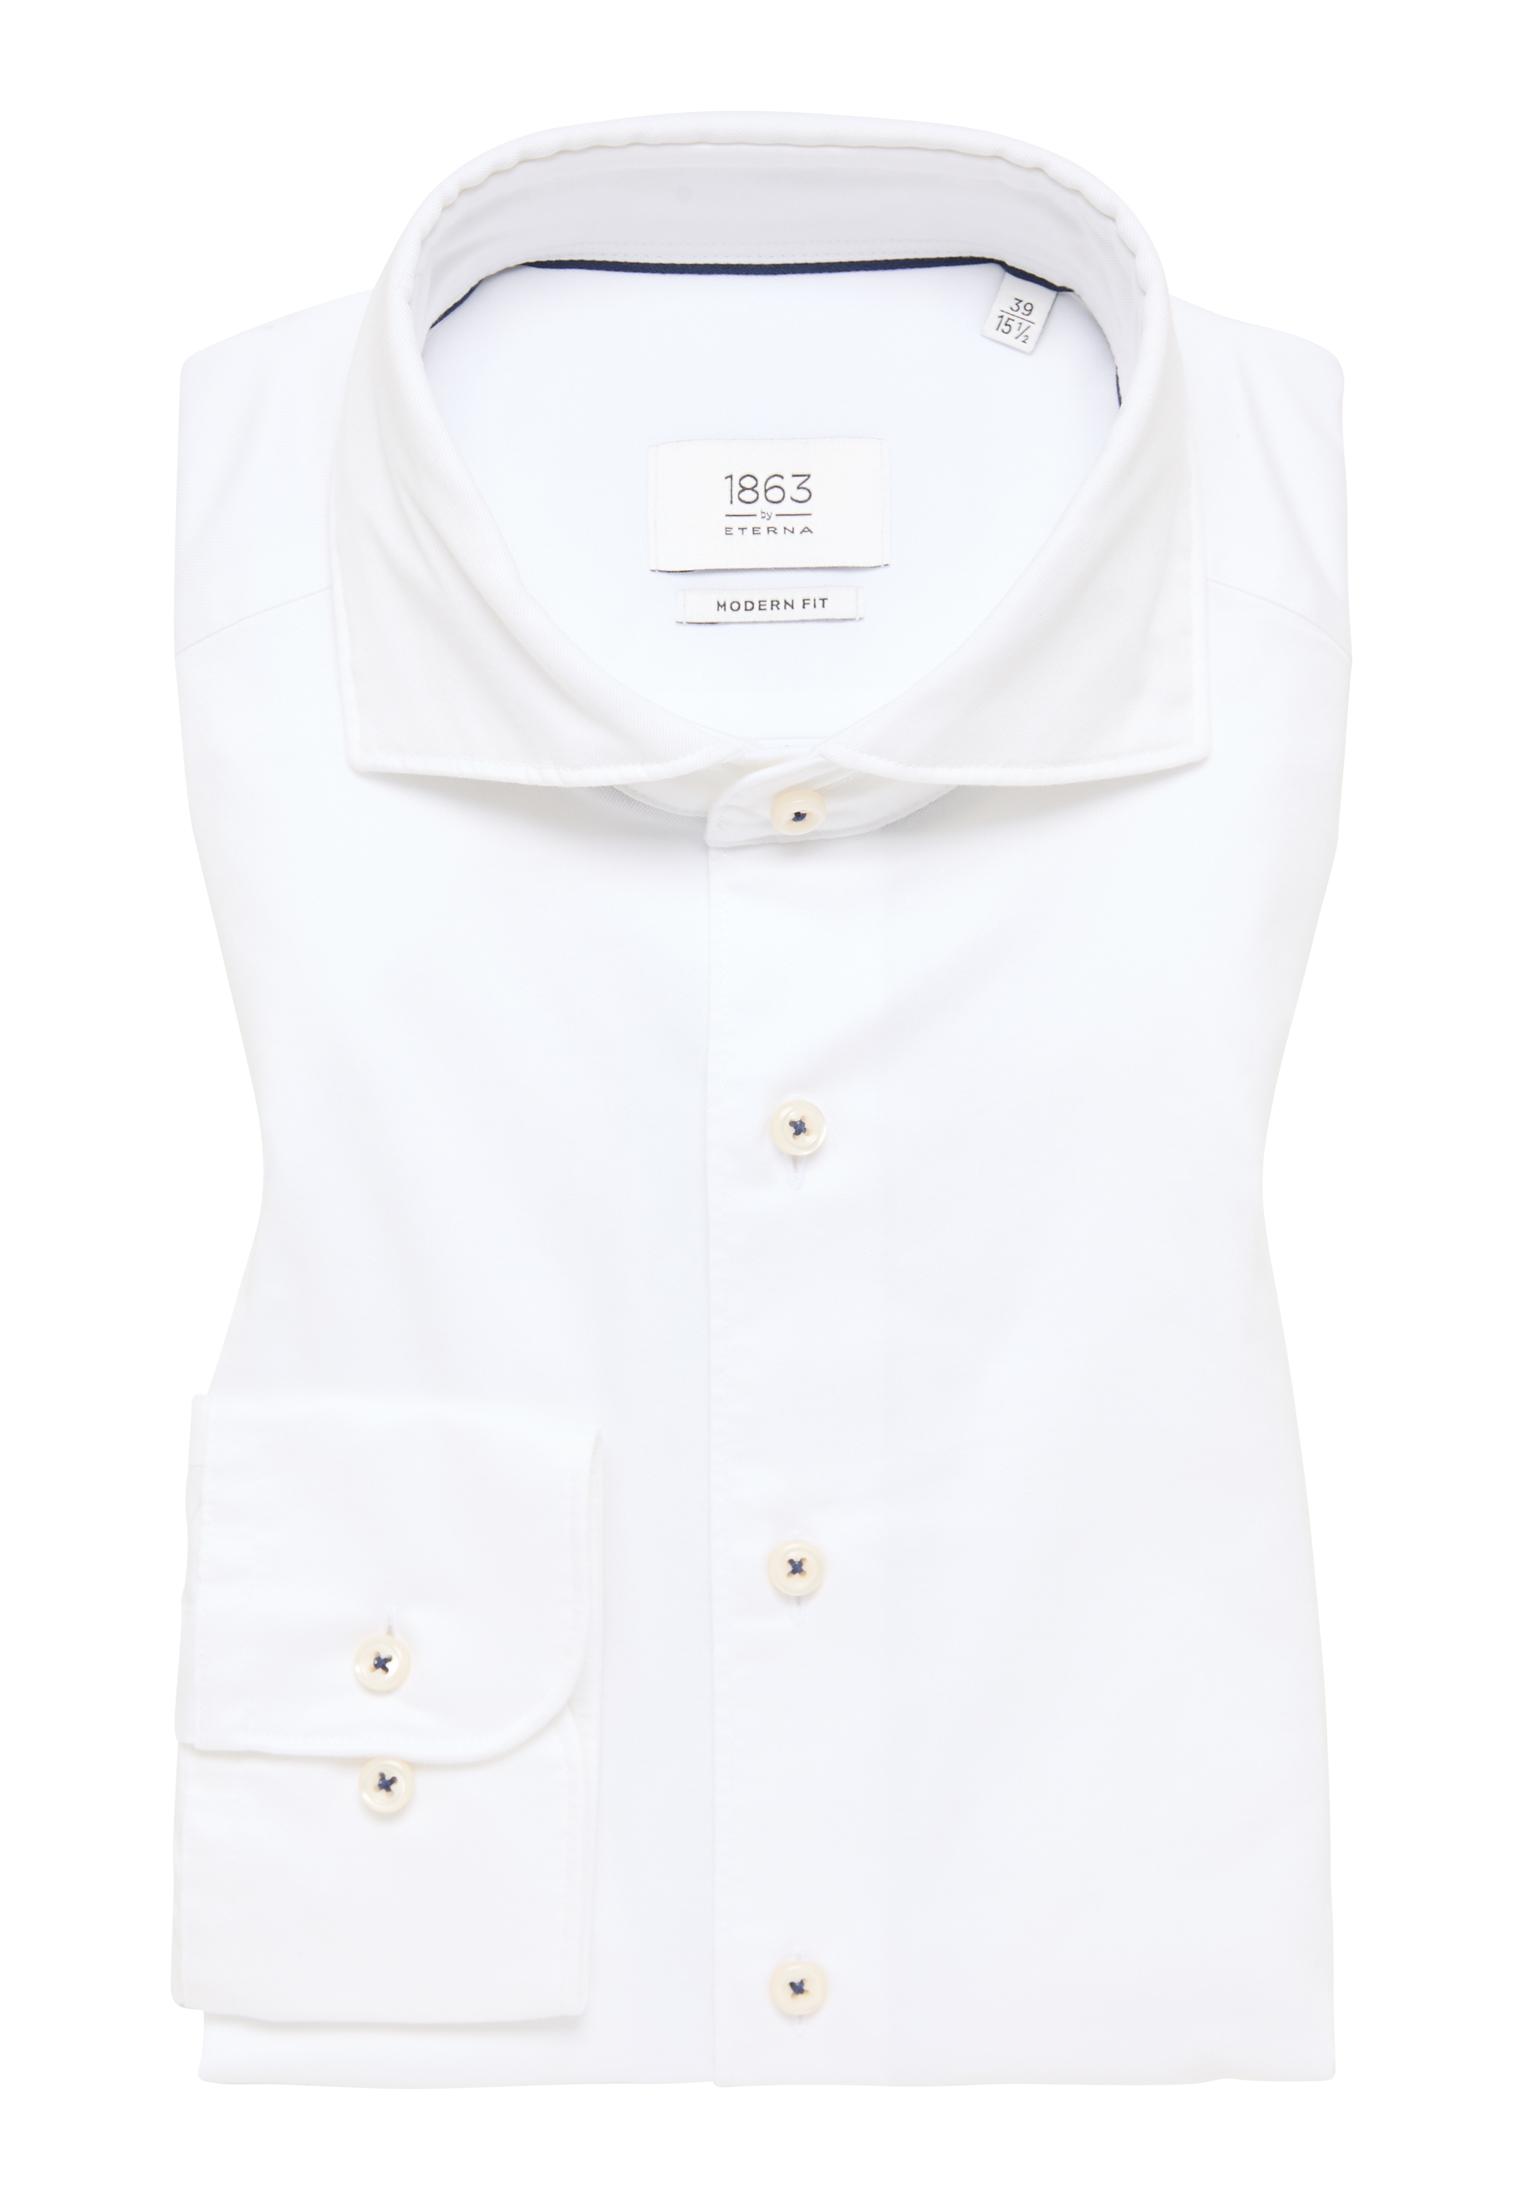 Langarm FIT 43 Shirt off-white off-white in | | MODERN Soft | unifarben 1SH03488-00-02-43-1/1 Luxury |